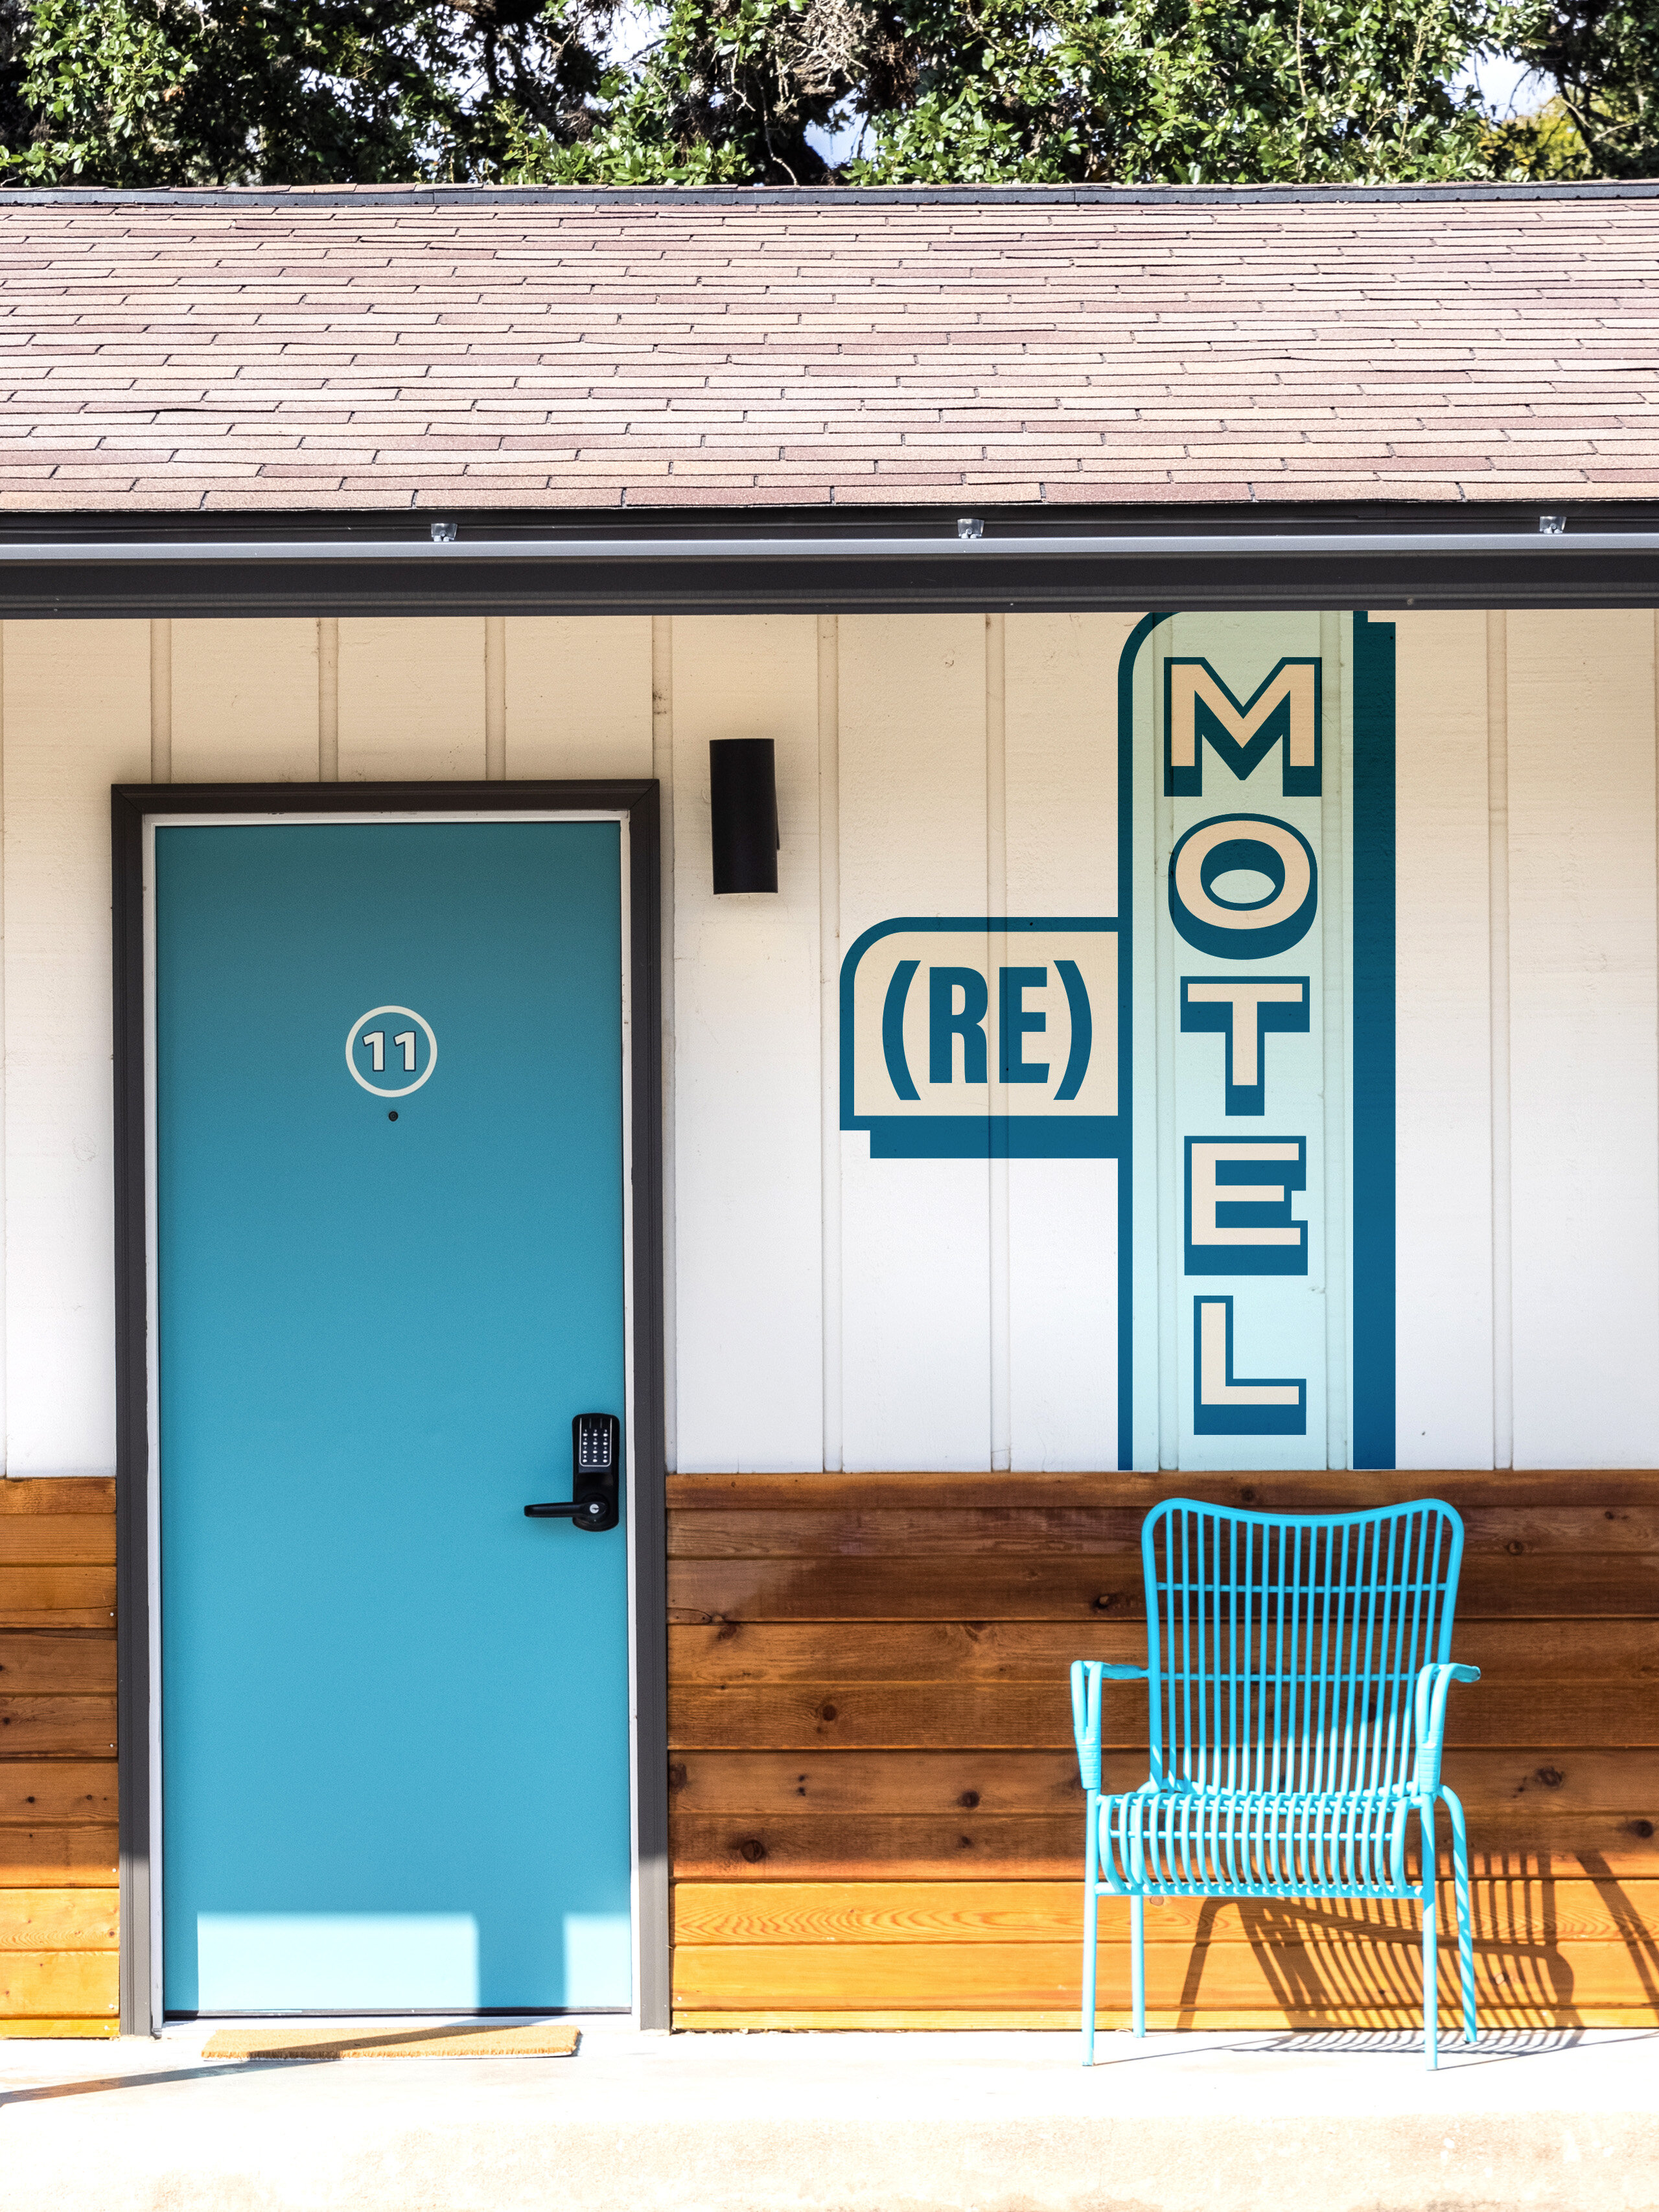 (Re)Motel ne zaman